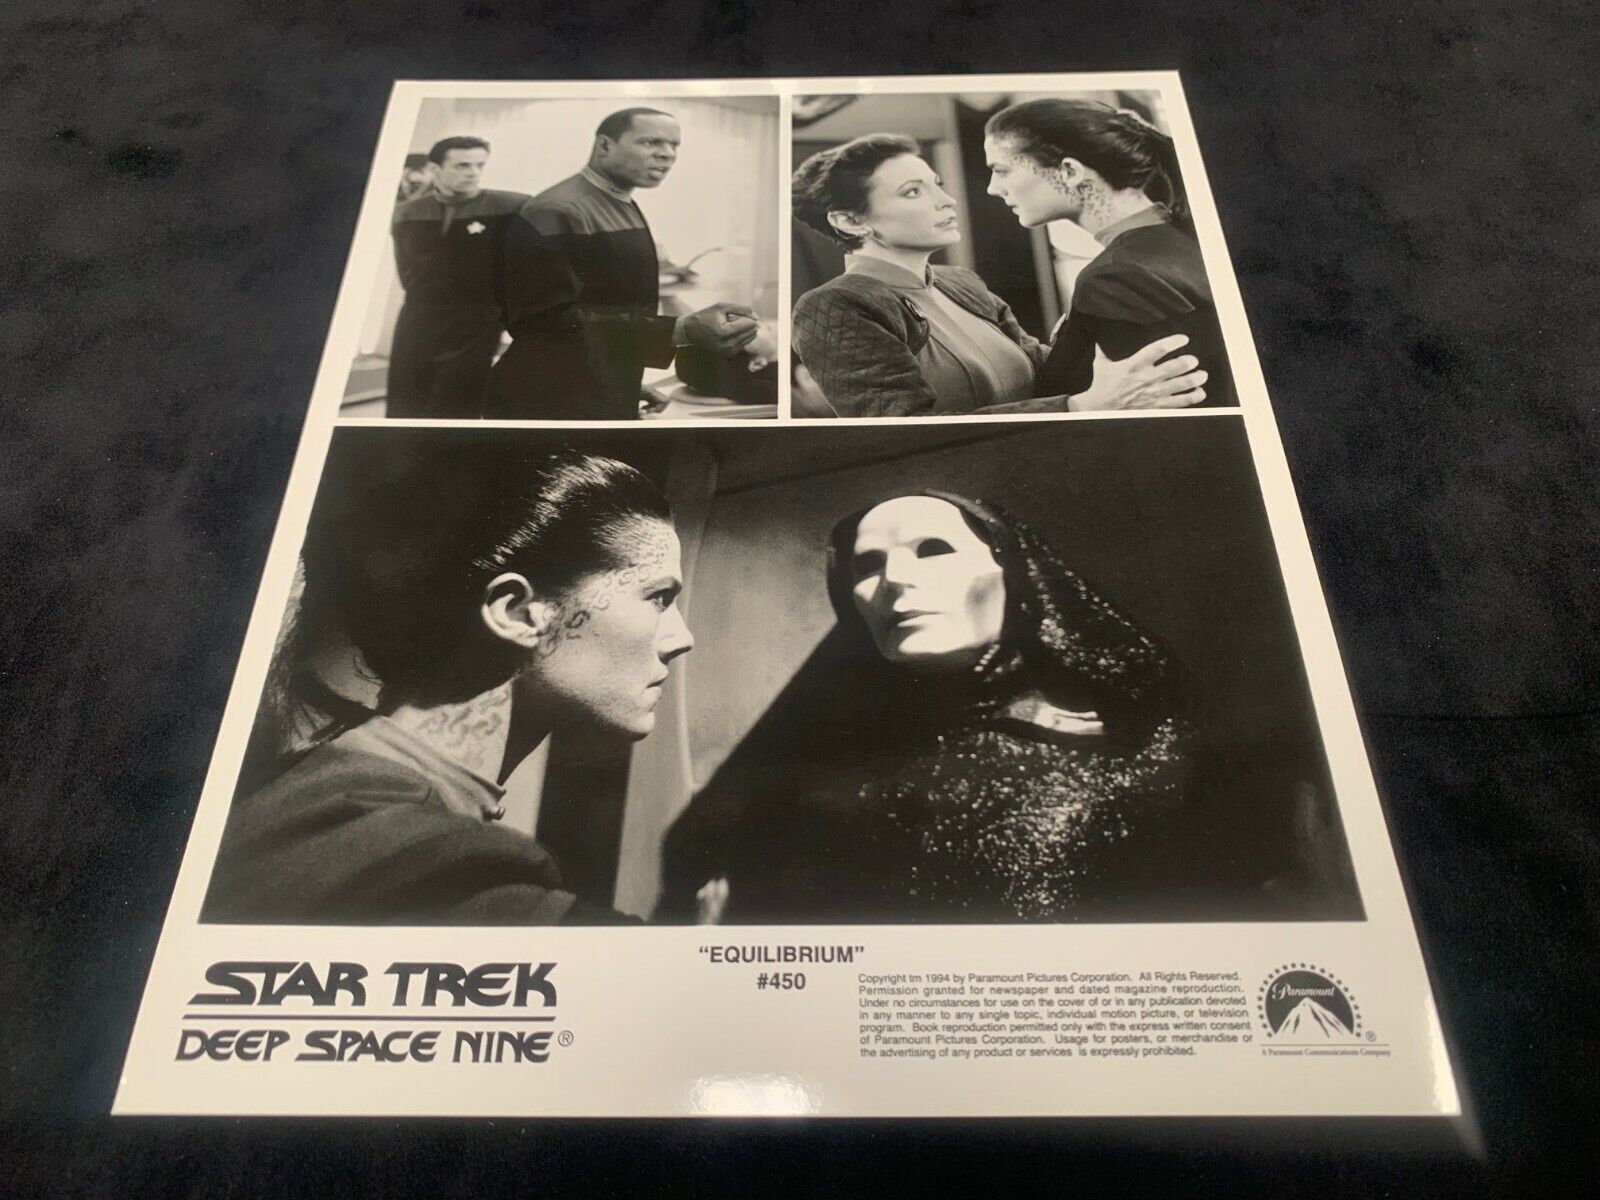 Star Trek Deep Space Nine 8x10 B&W Photo of Equilibrium 450 Photo B